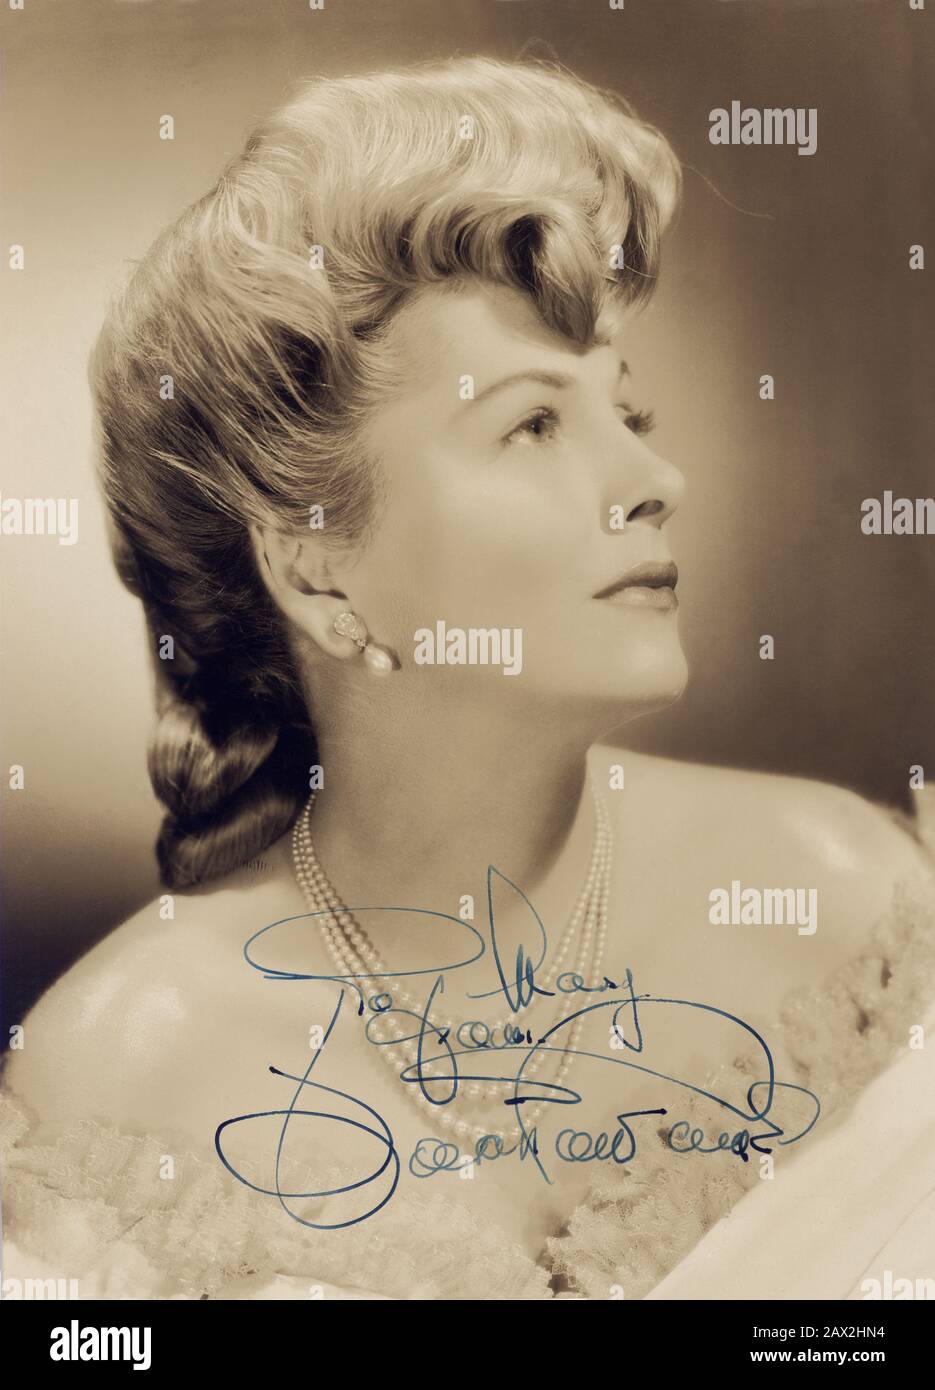 British actress joan hi-res stock photography and images - Alamy